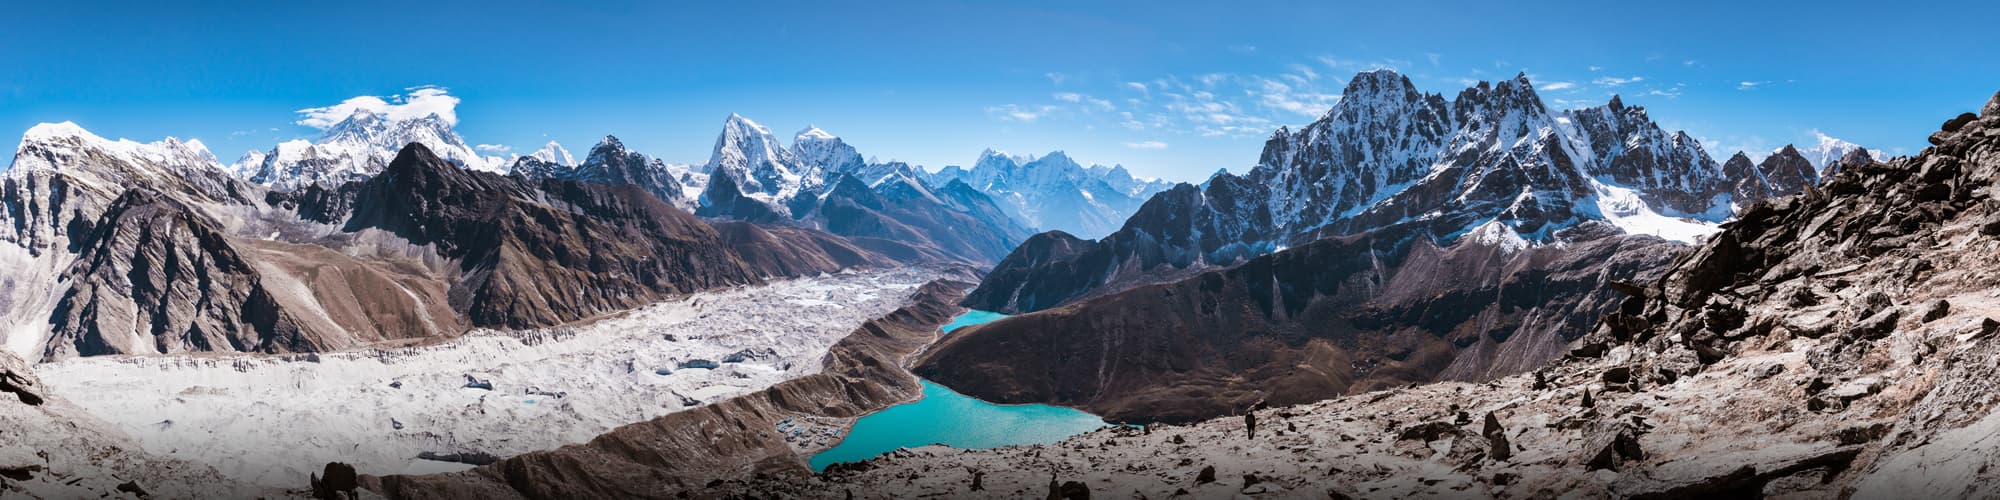 Voyage en groupe Népal © Rmnunes / iStock